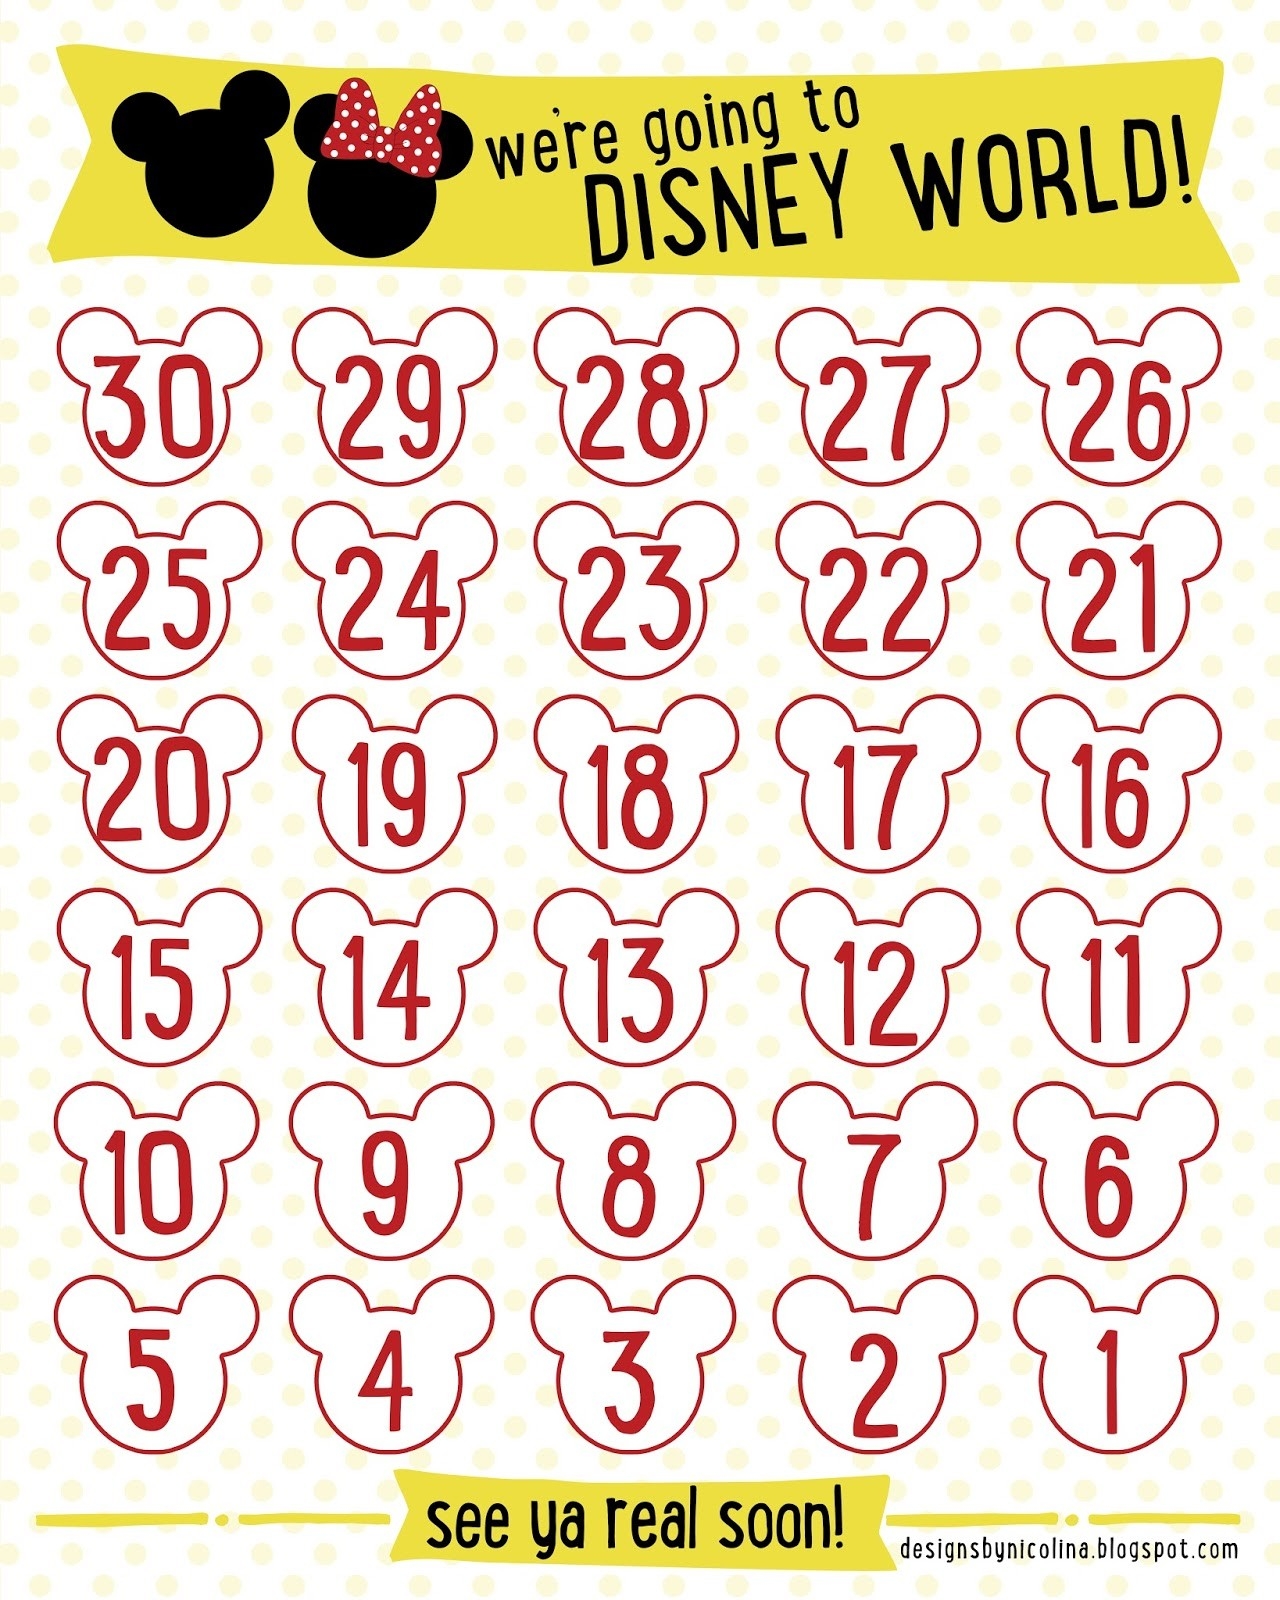 Designs By Nicolina: Disney Countdown! /// Free Printable ///-Printable Coutndown Days Template